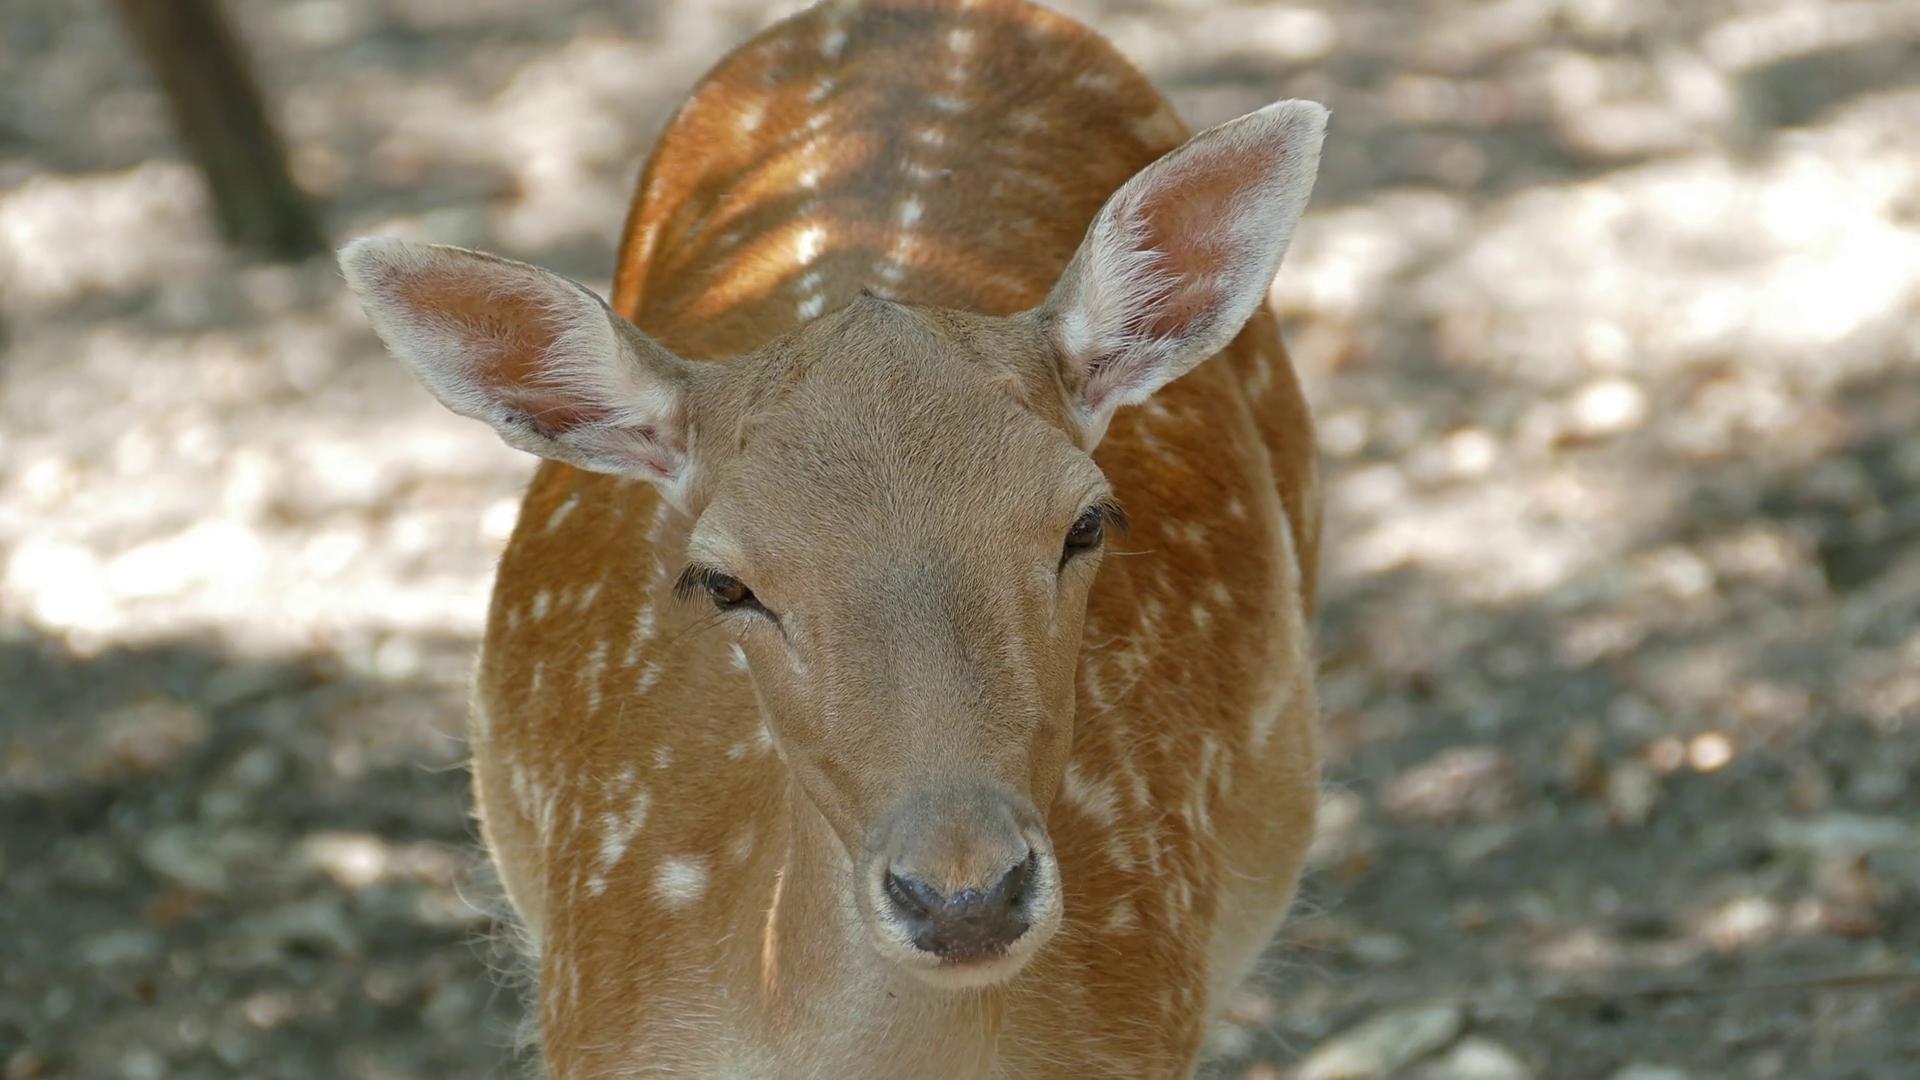 Young deer face closeup 4k Stock Video Footage - VideoBlocks